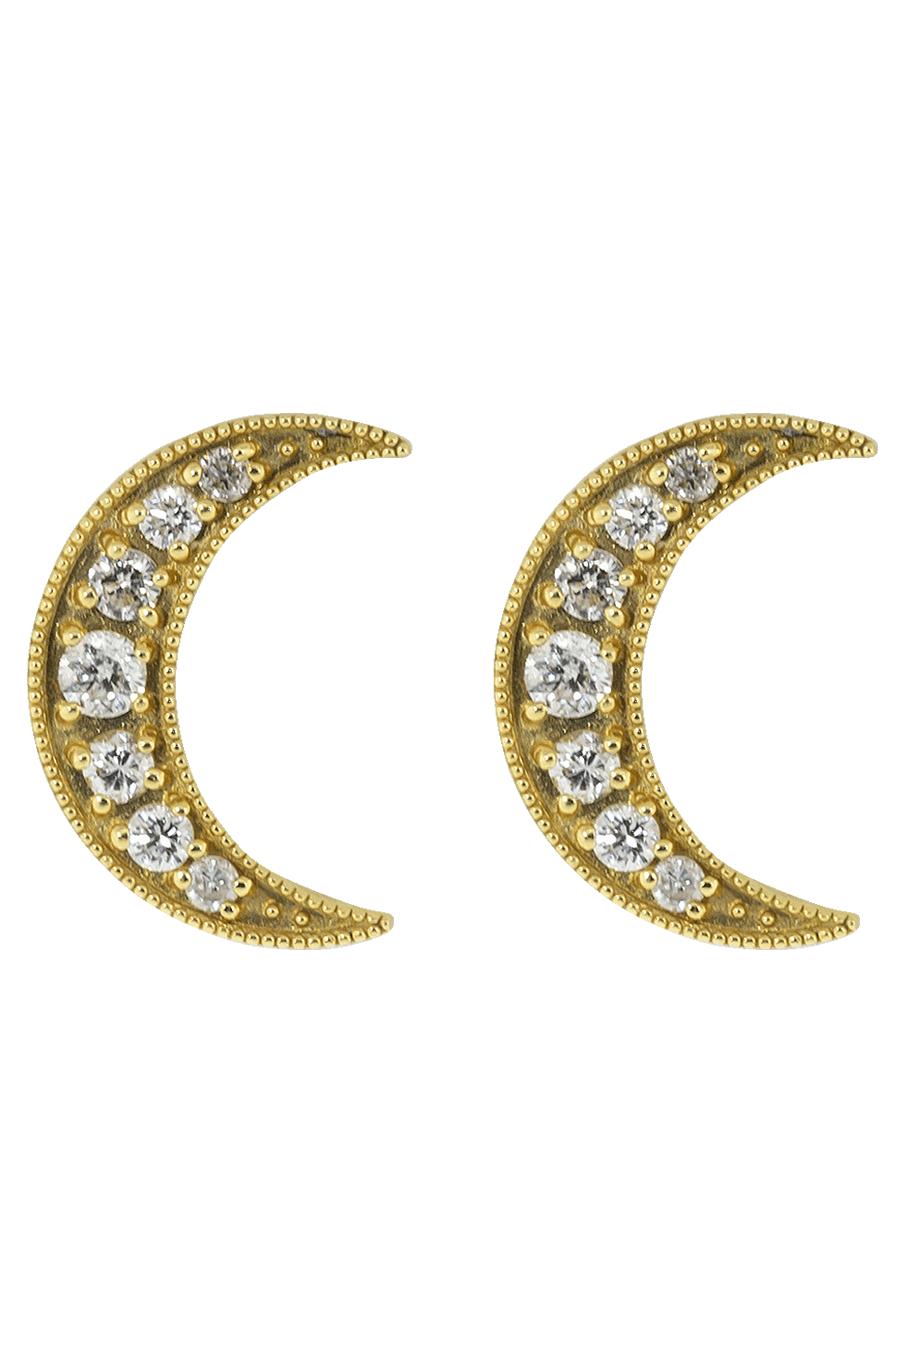 ANDREA FOHRMAN-Crescent Moon Diamond Studs-YELLOW GOLD